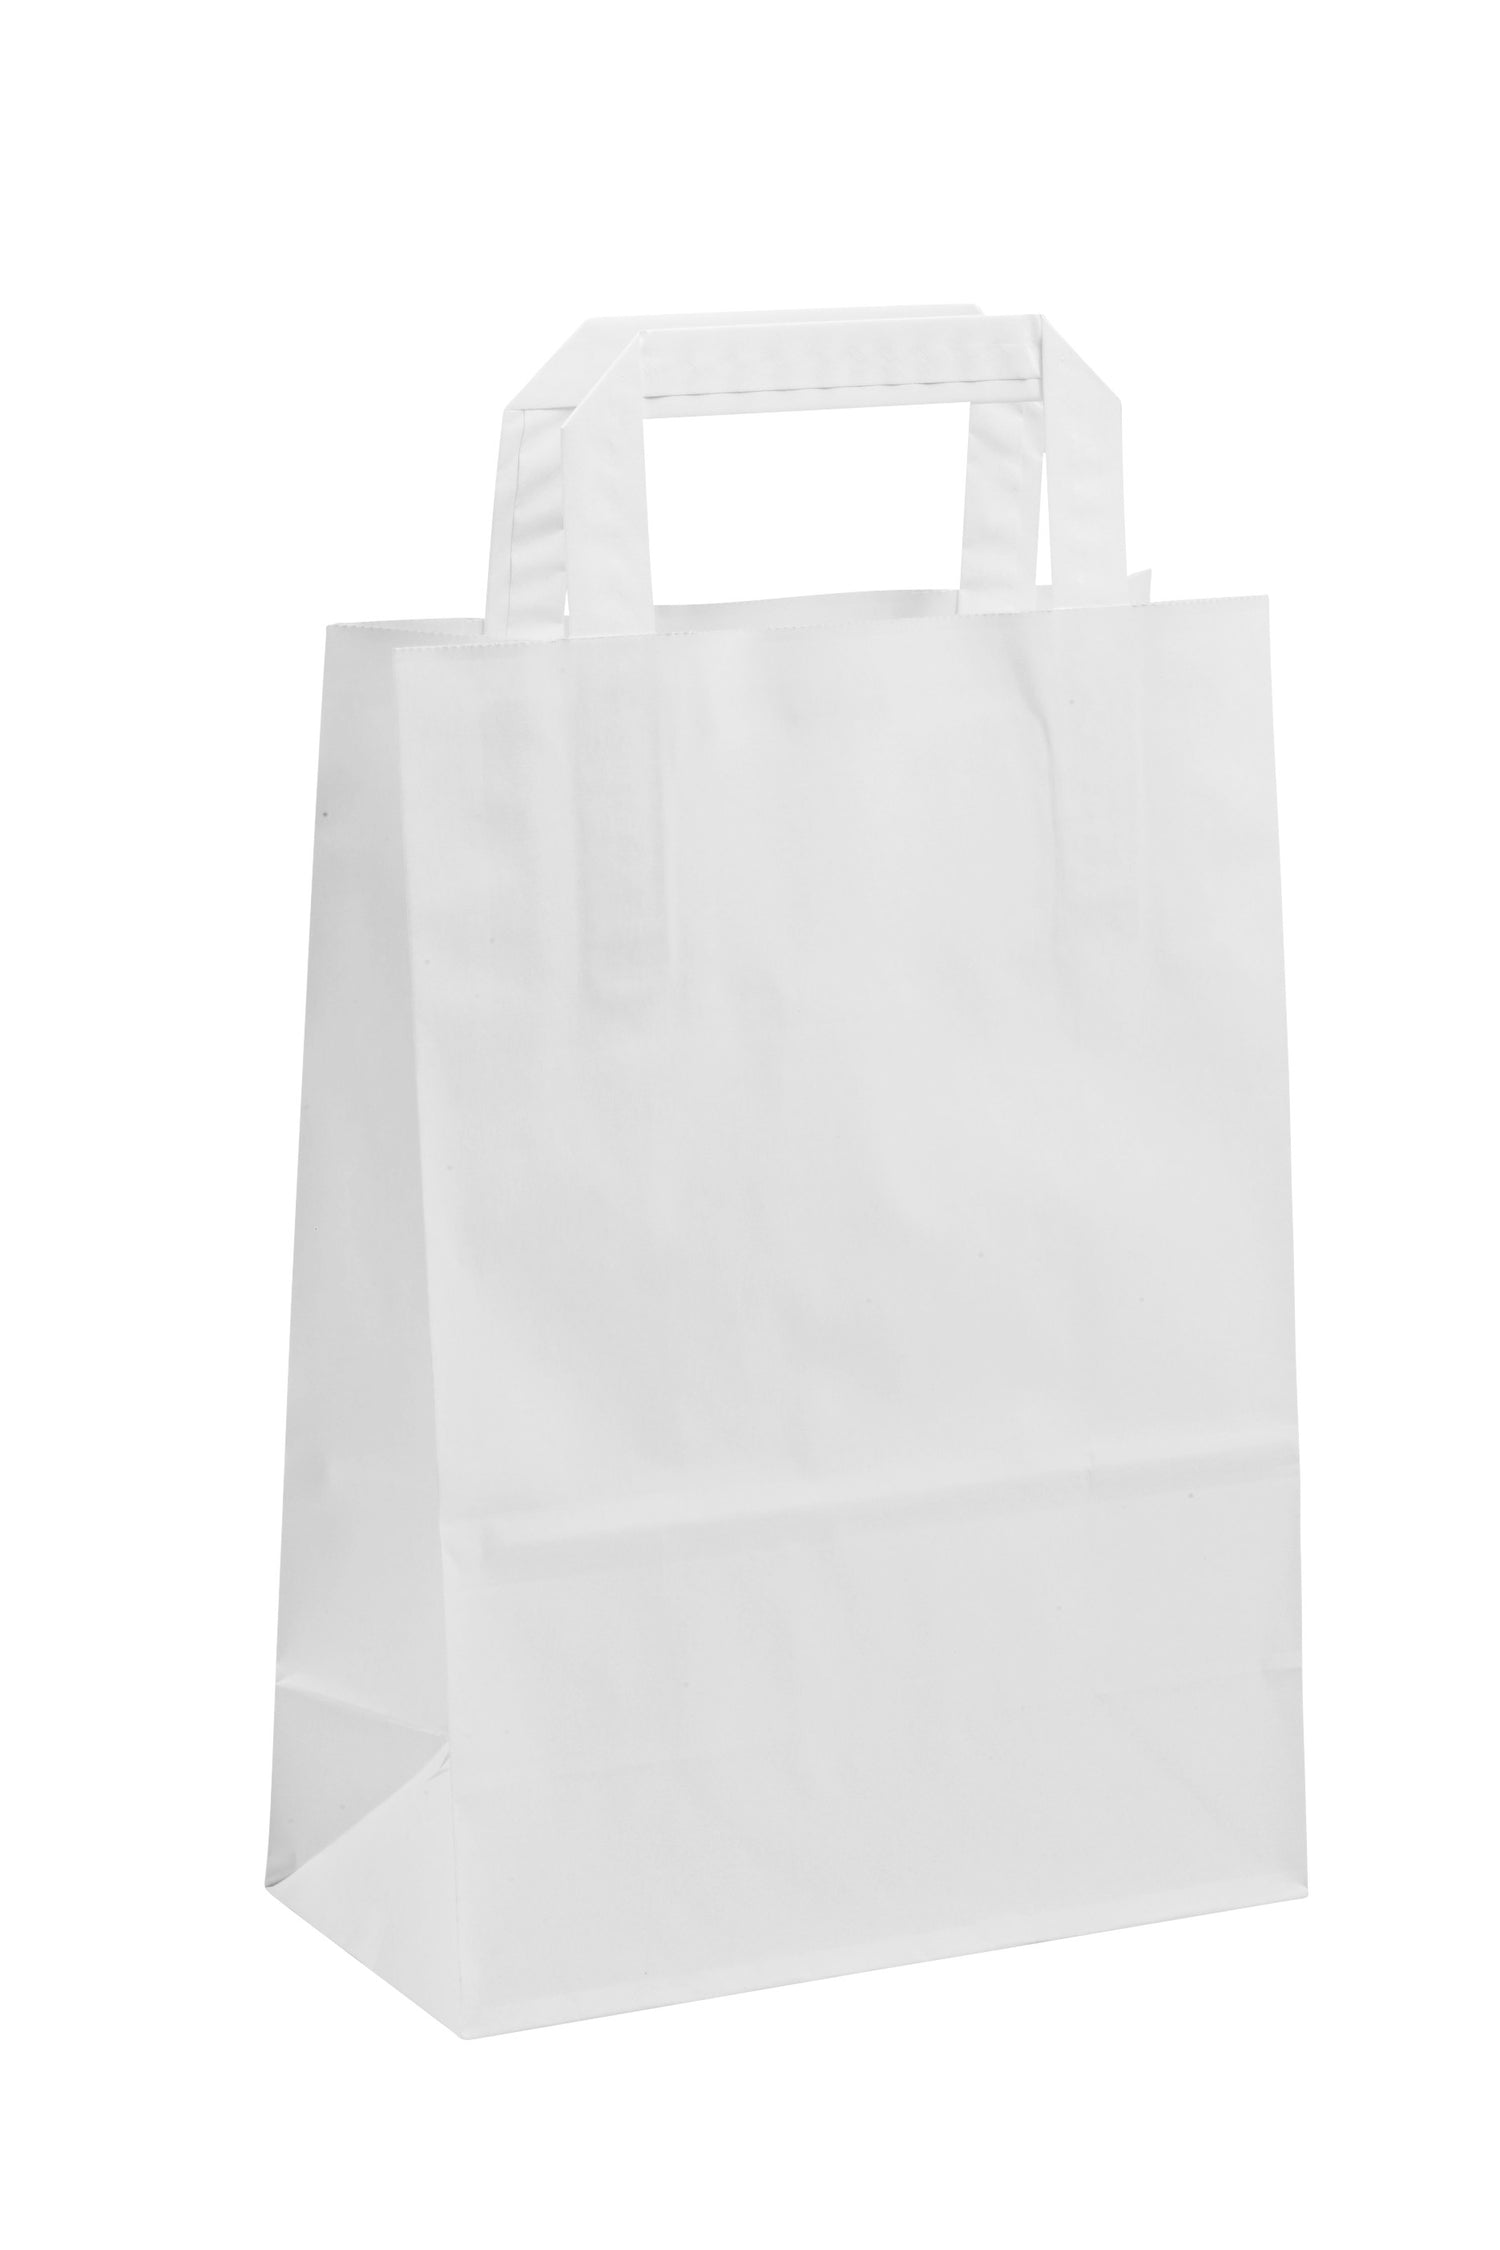 Printed White Kraft Takeaway Bags (4 SIZES)